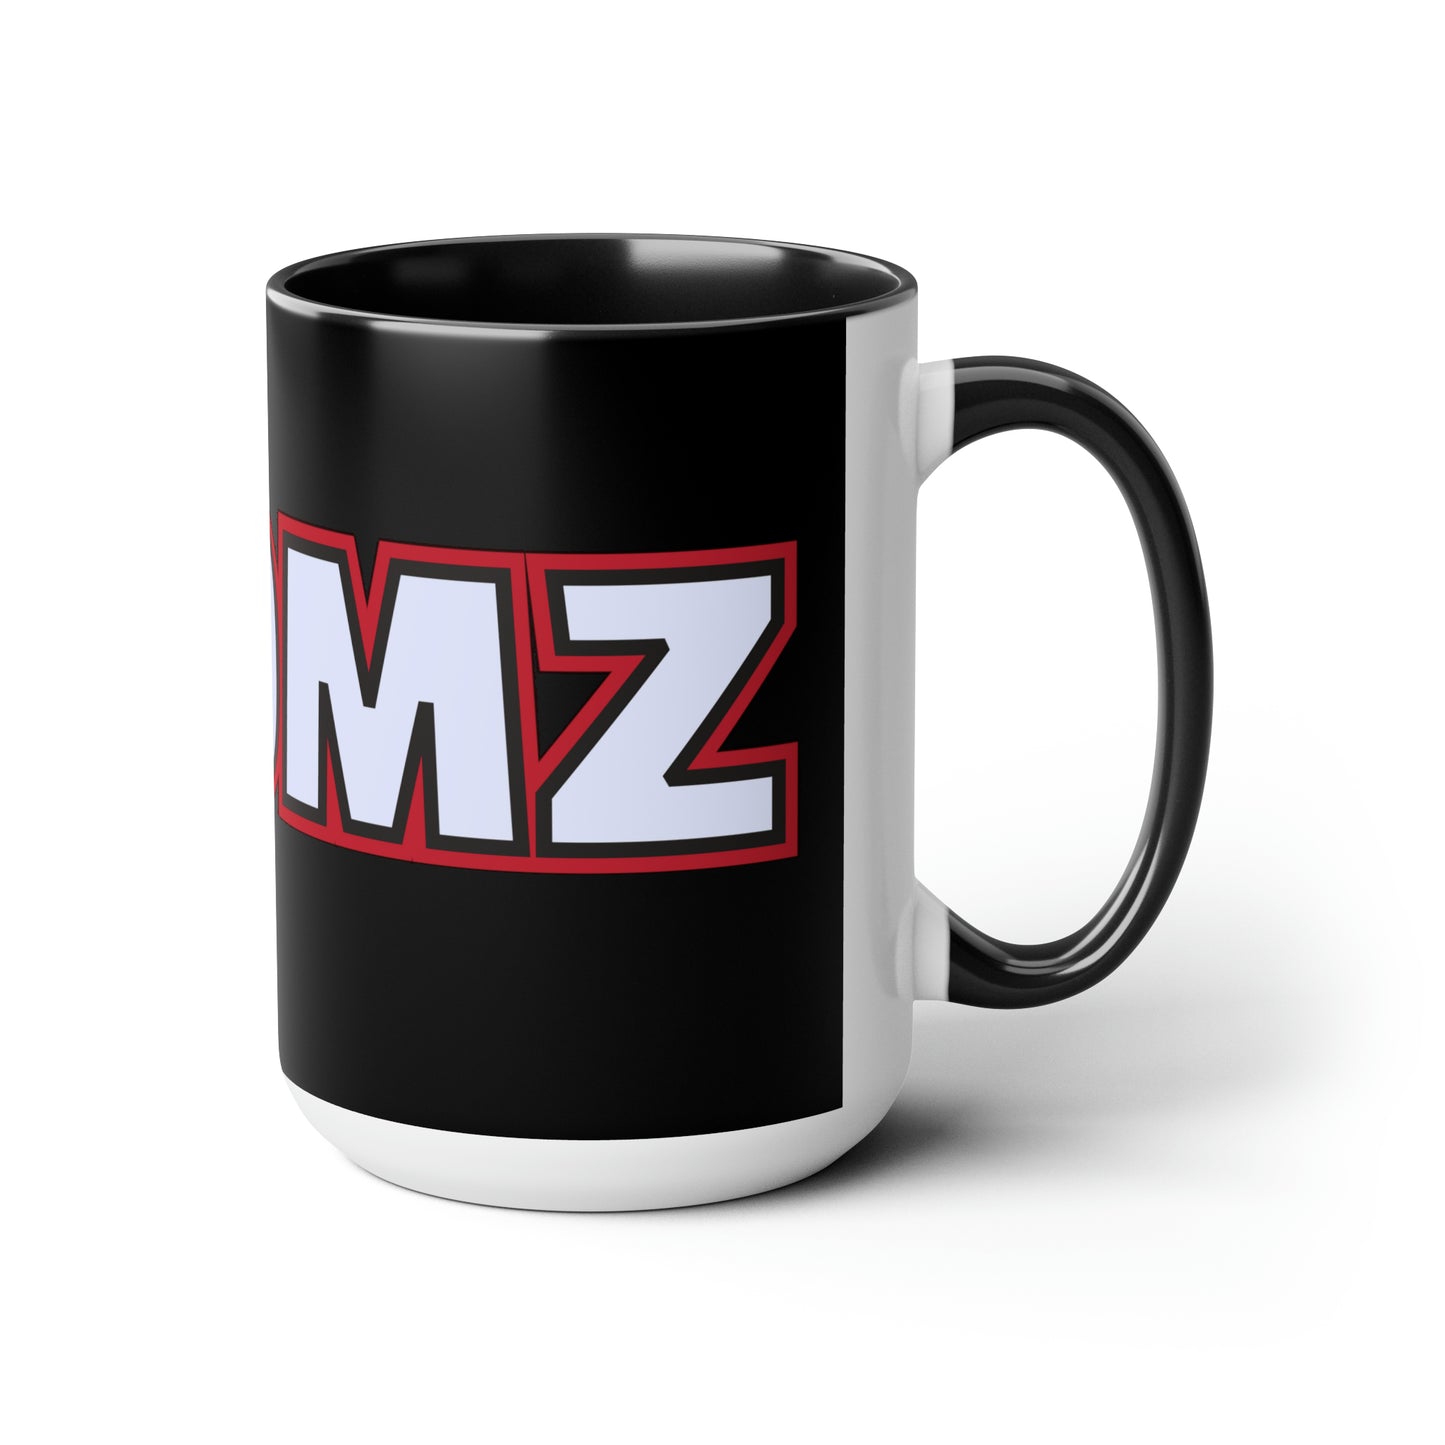 Two-Tone Coffee Mugs, 15oz